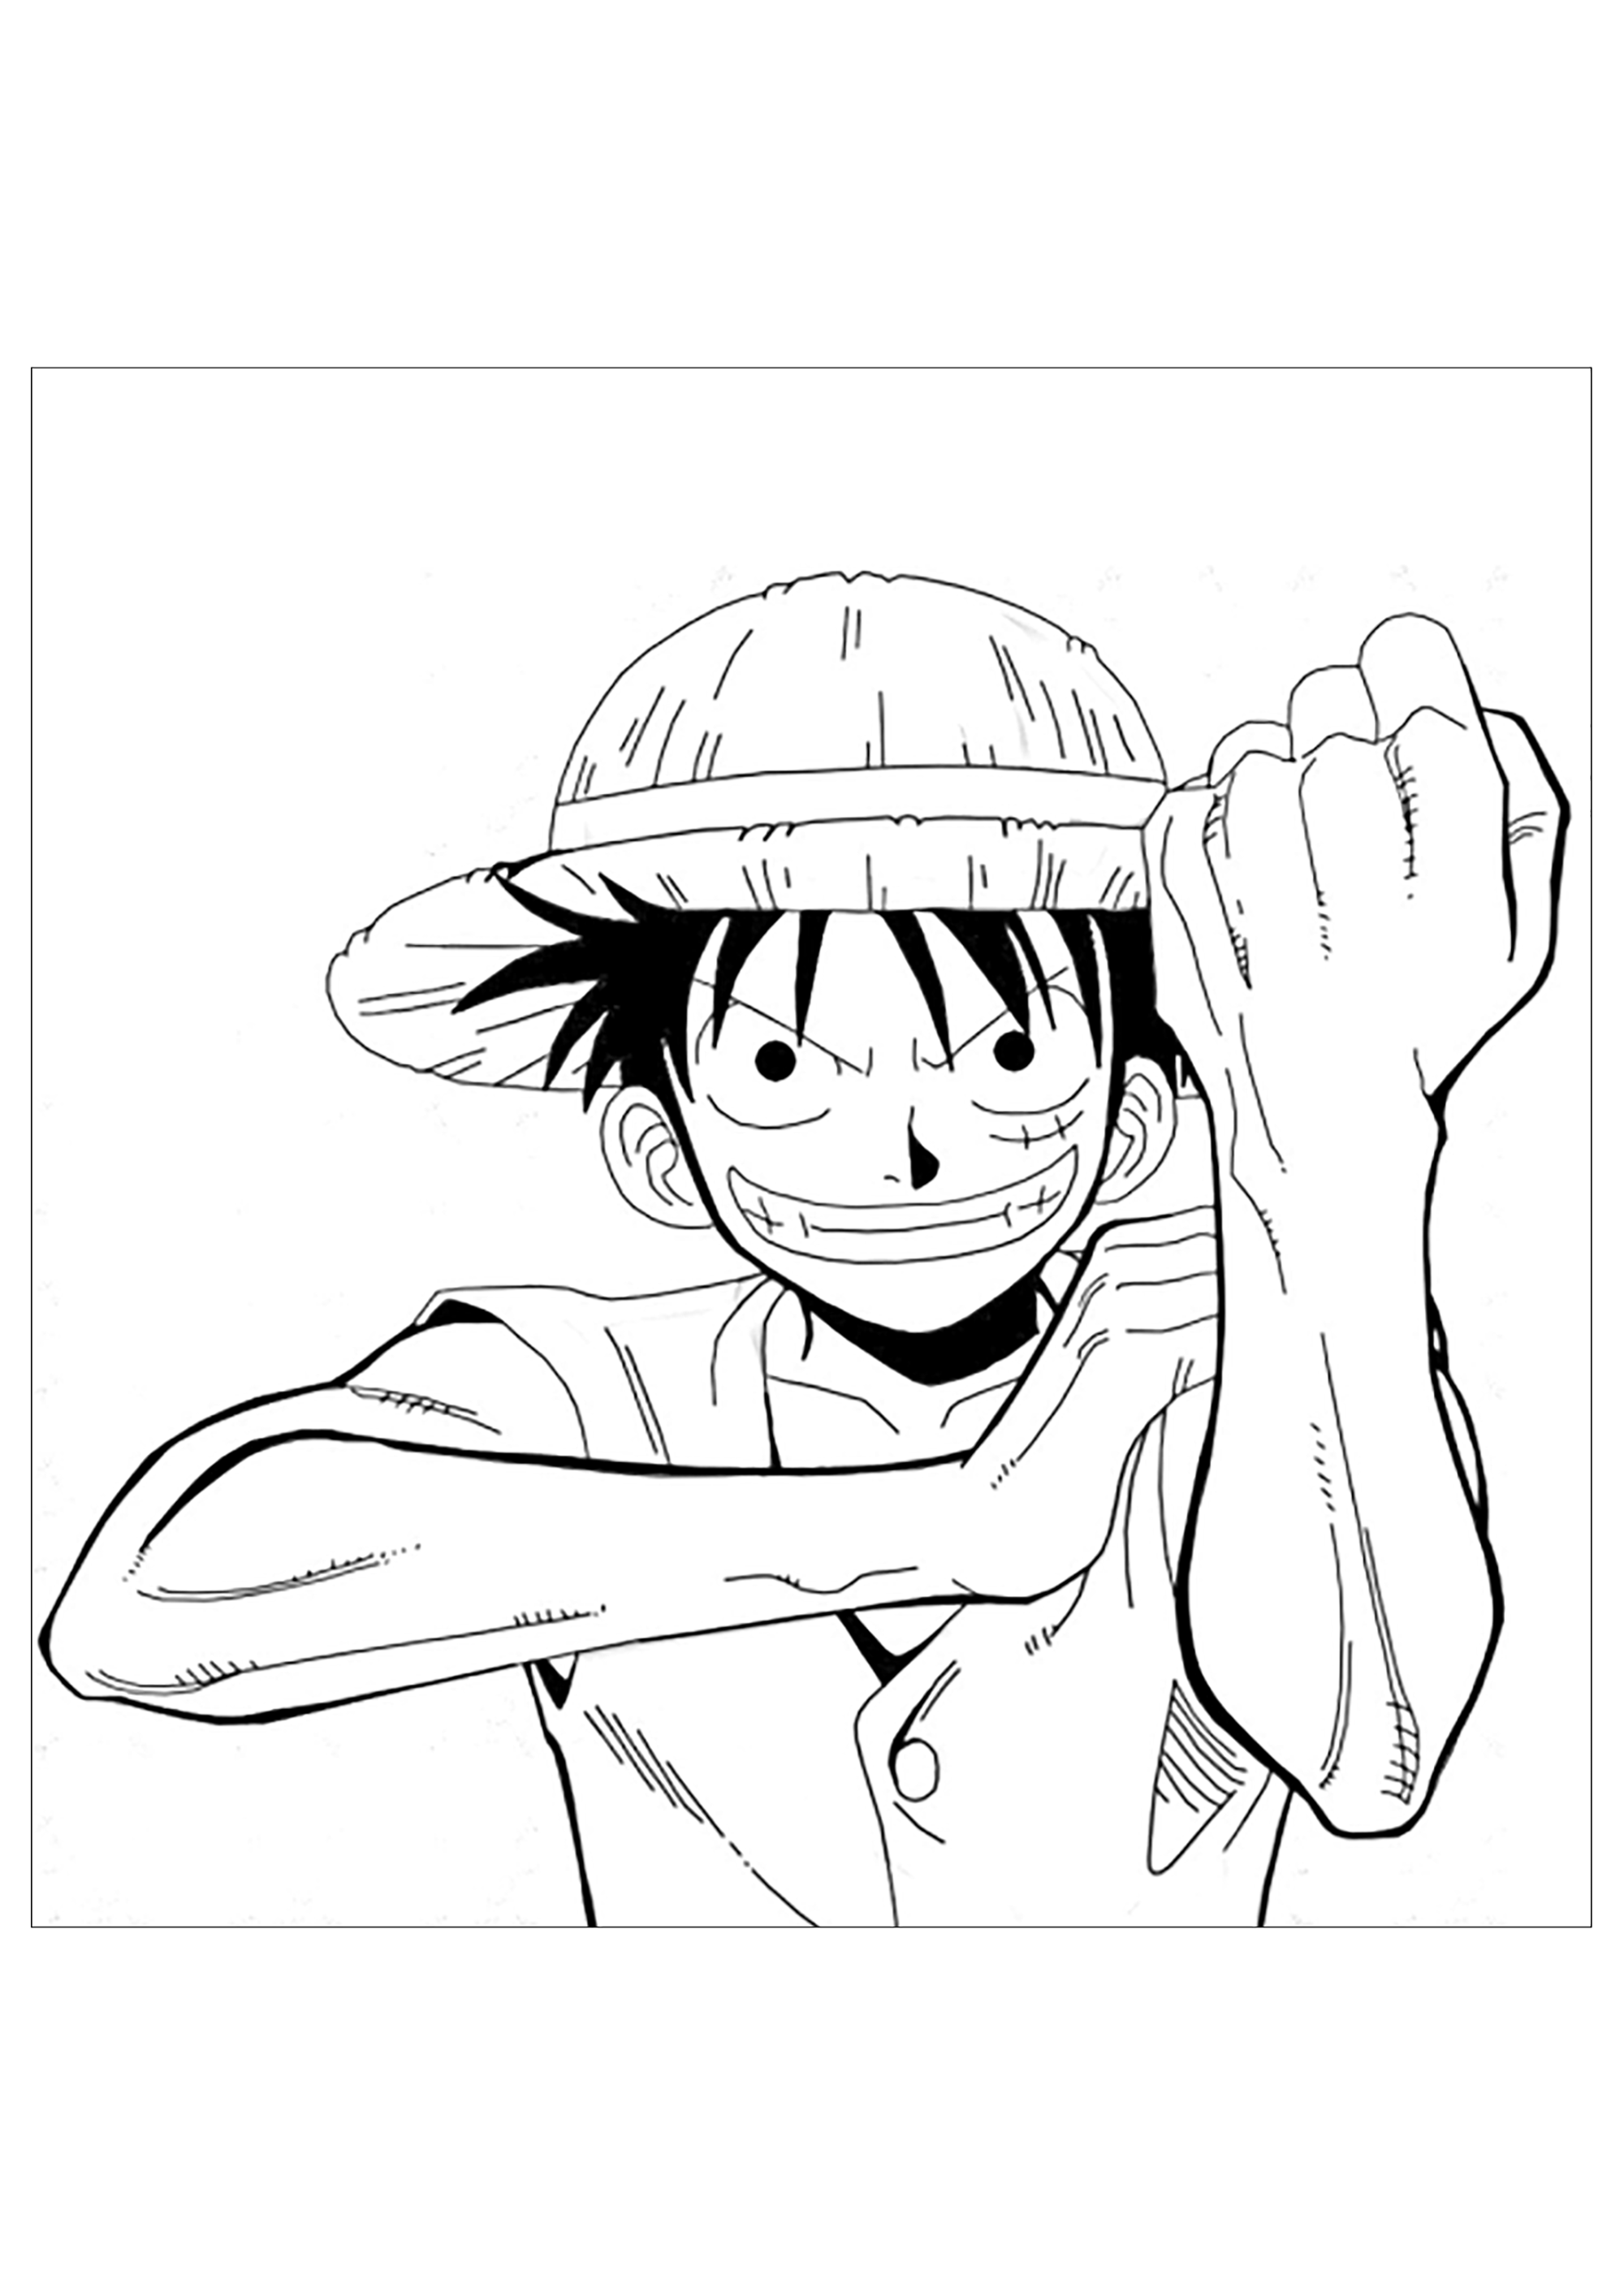 Imagen de One Piece para descargar e imprimir para niños